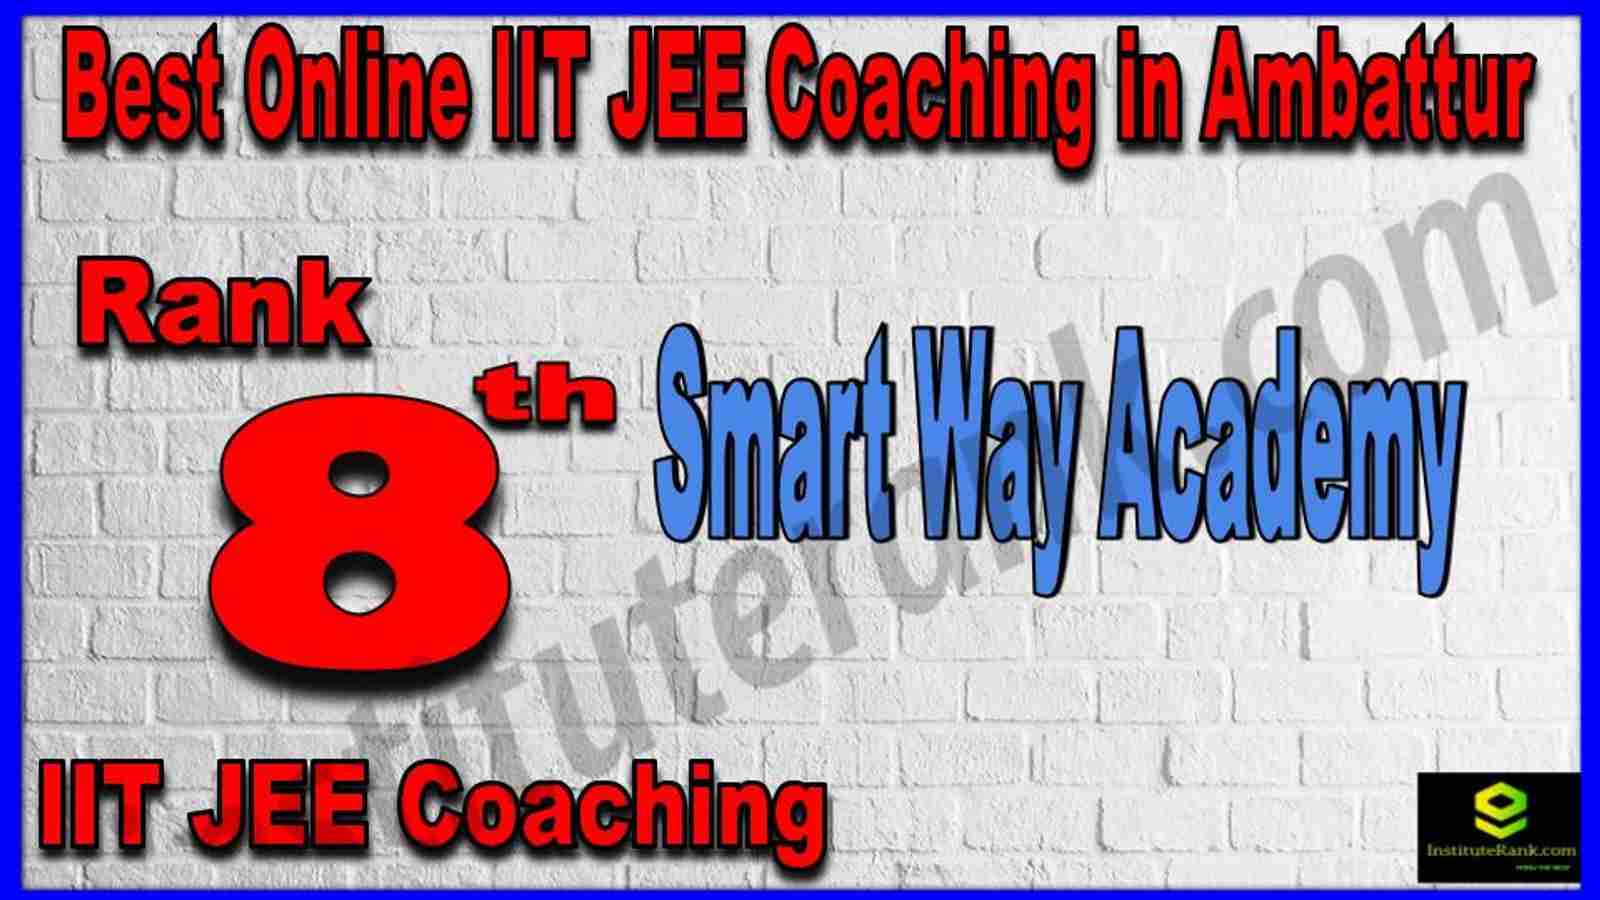 Rank 8th Best Online IIT JEE Coaching in Ambattur